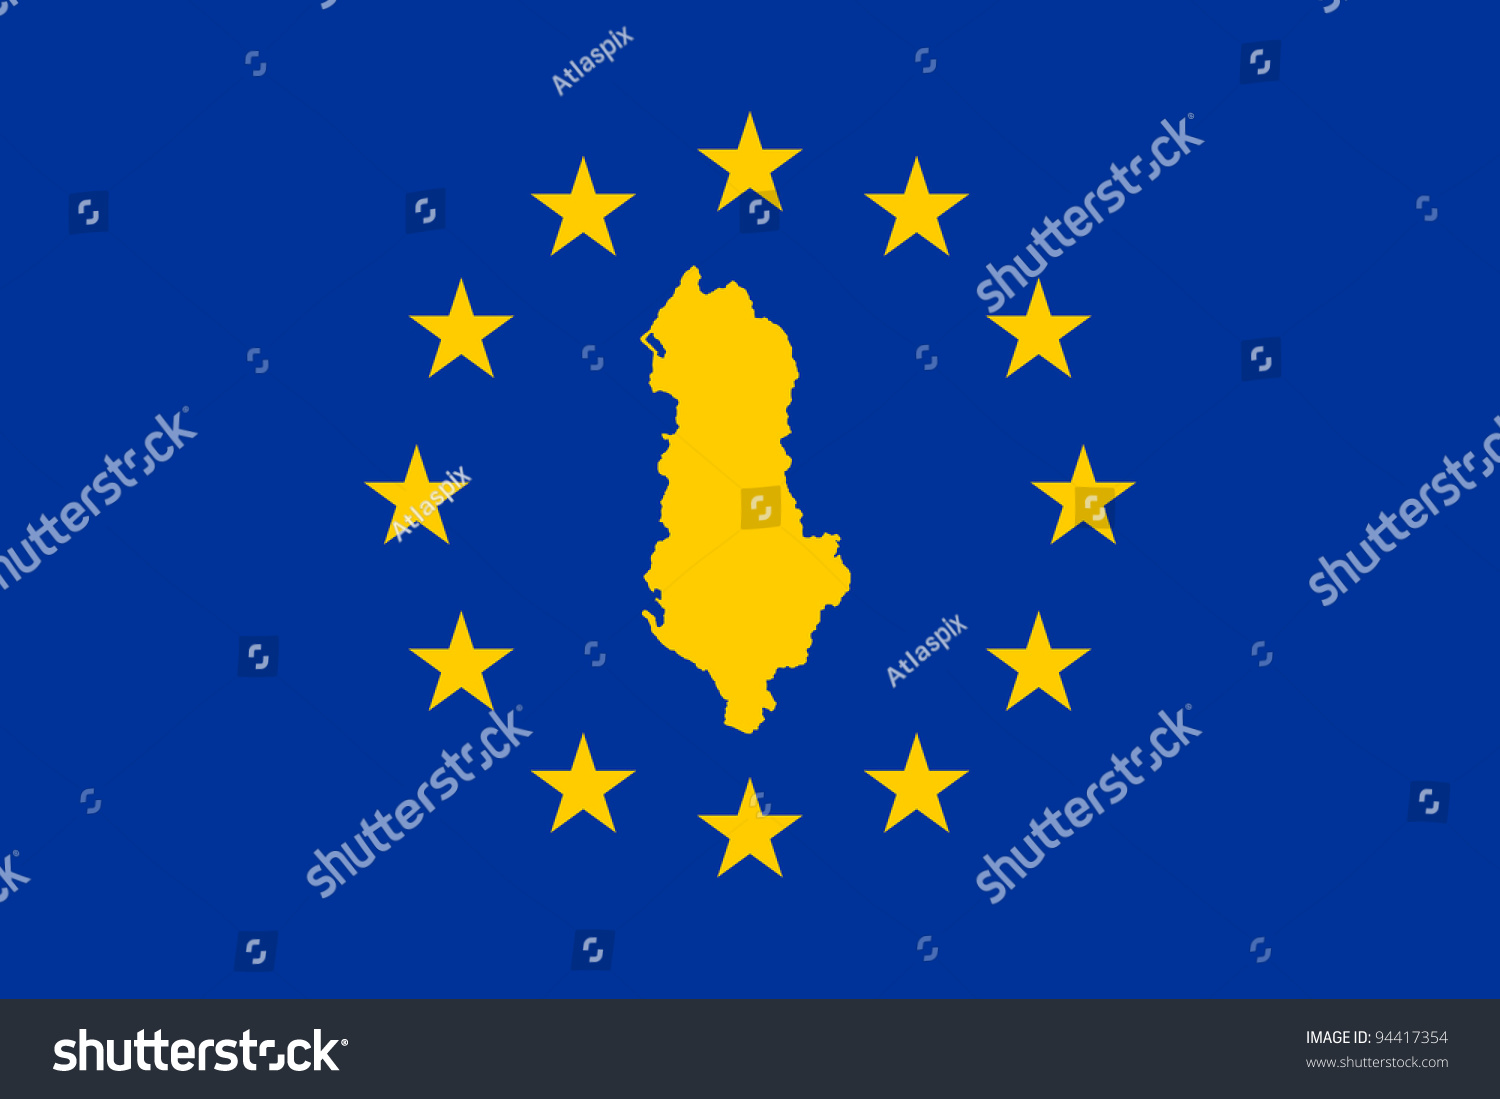 Map Of Albania On European Union Flag With Yellow Stars. Stock Photo ...